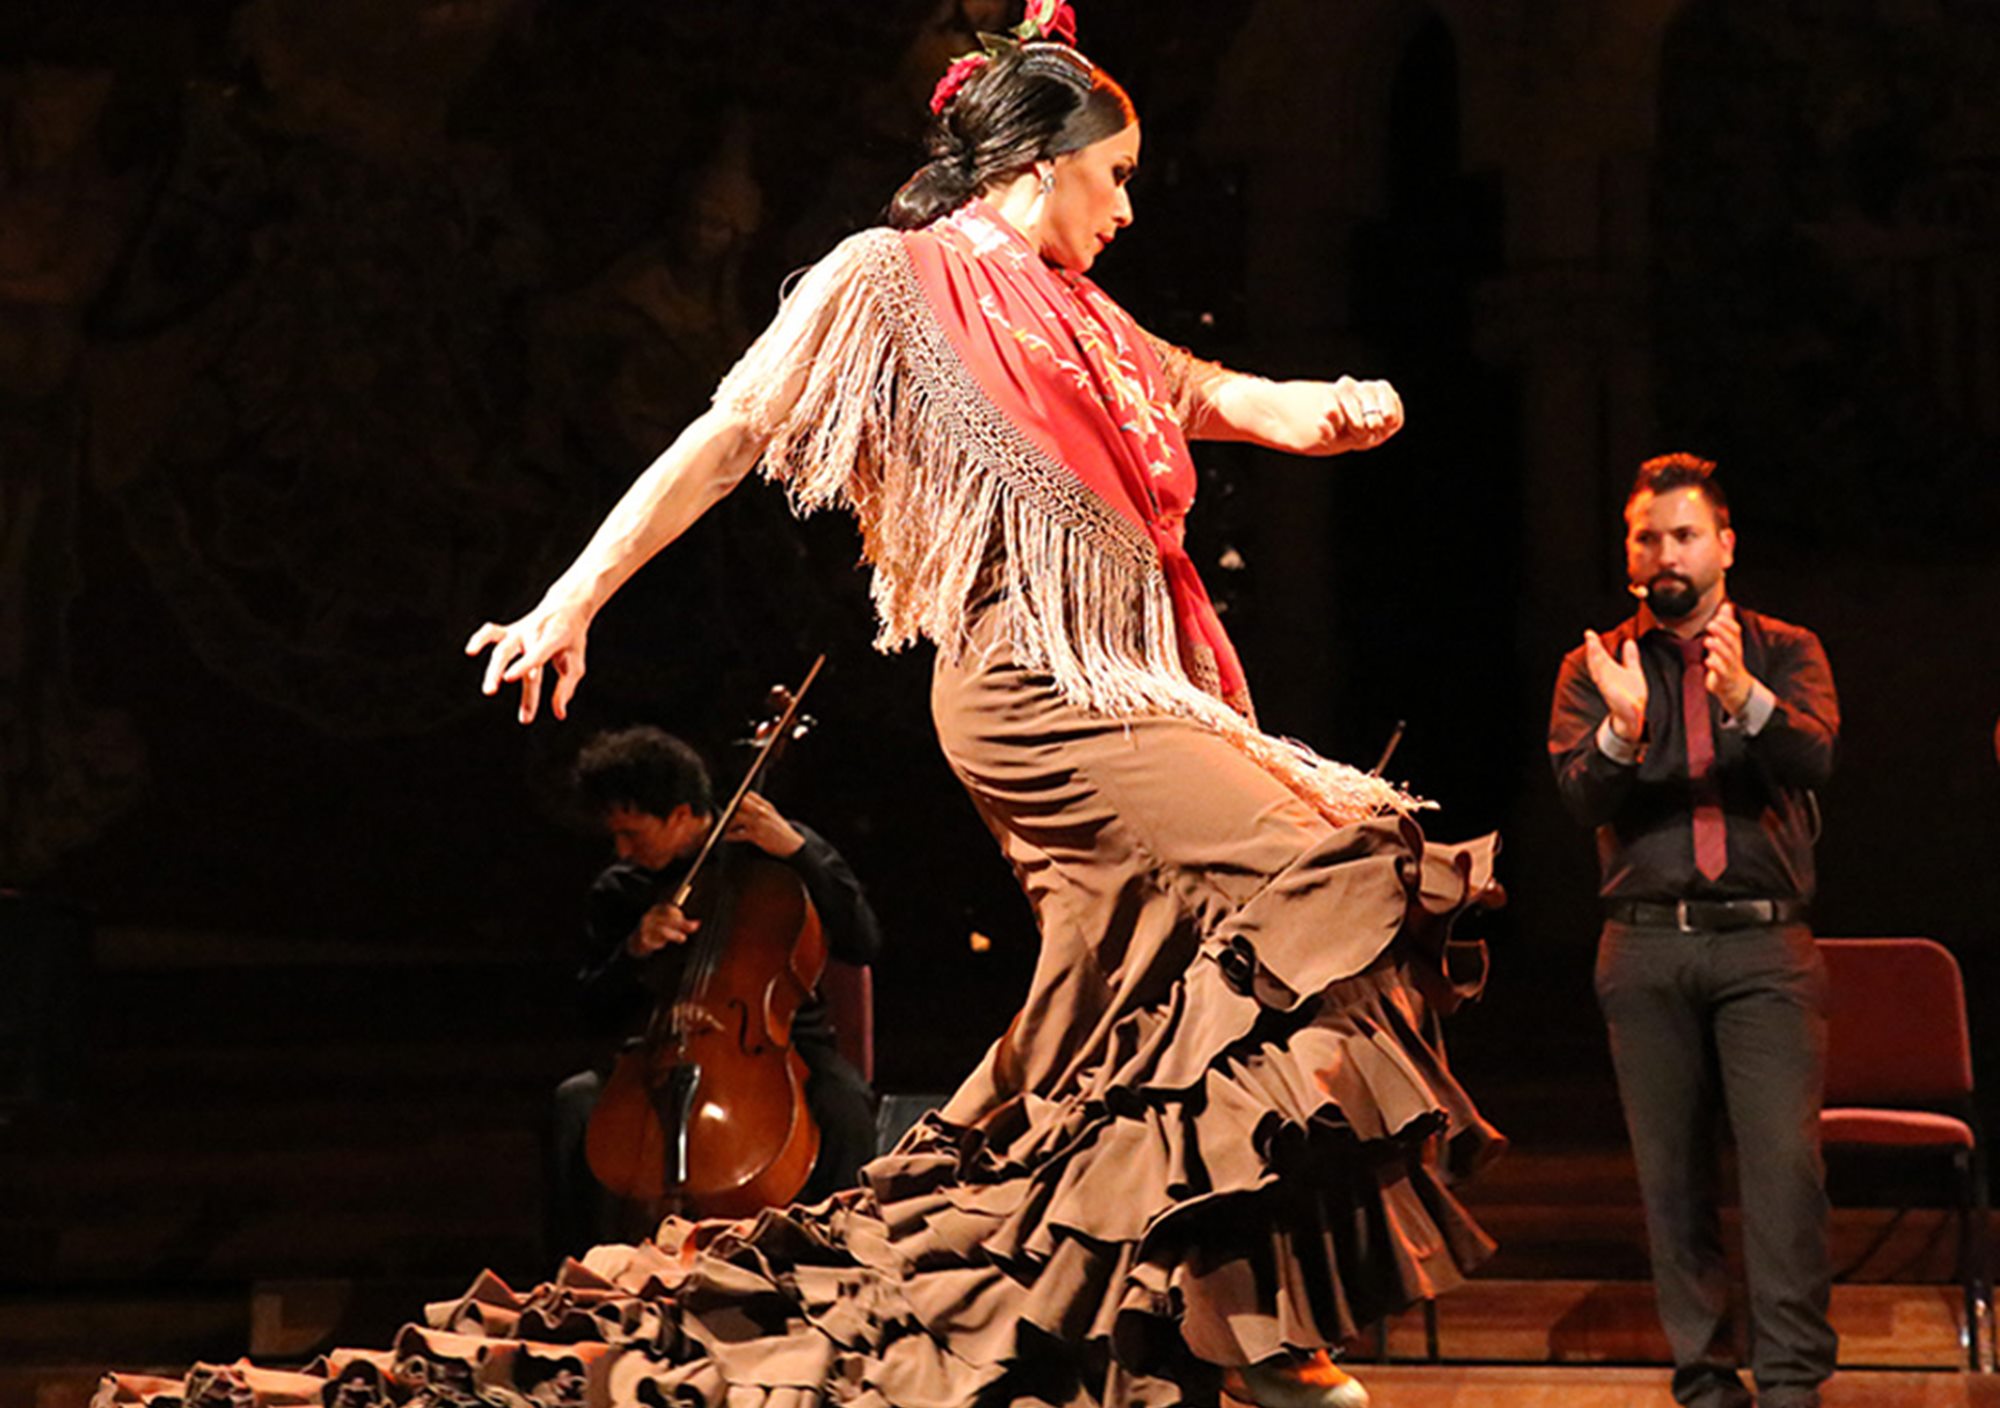 réserver tours spectacle flamenco Teatre Poliorama barcelone billets visiter